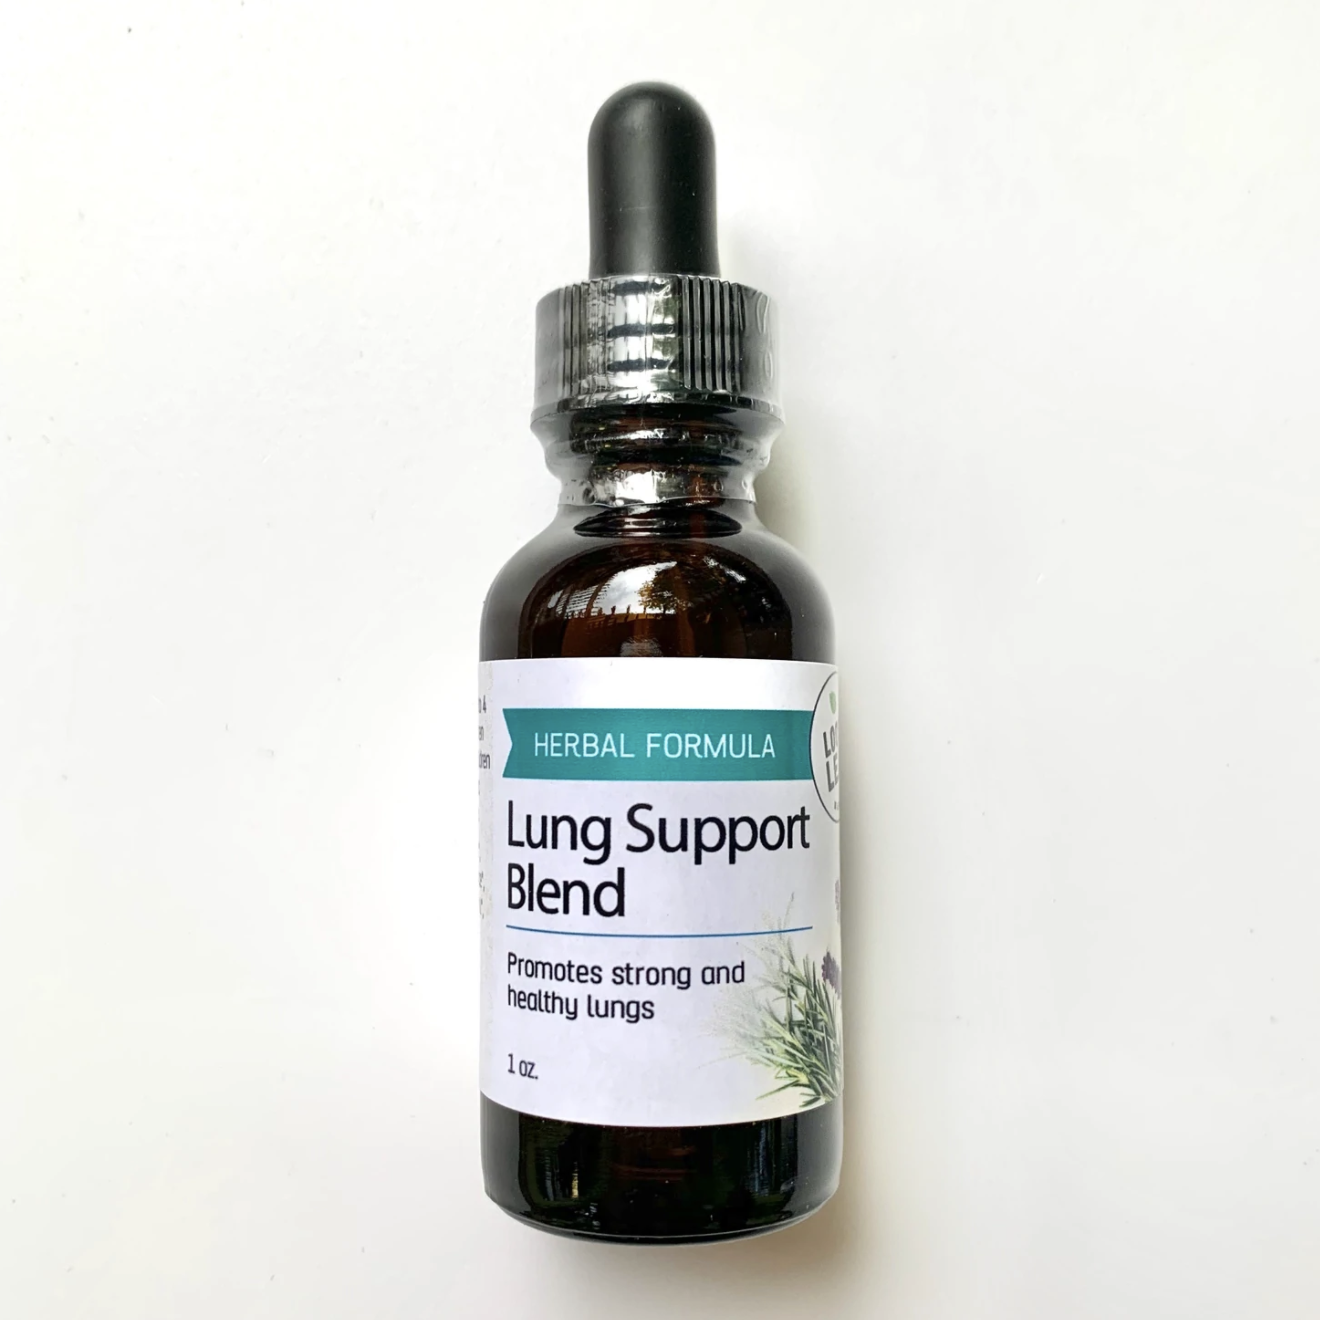 Lung Support Blend